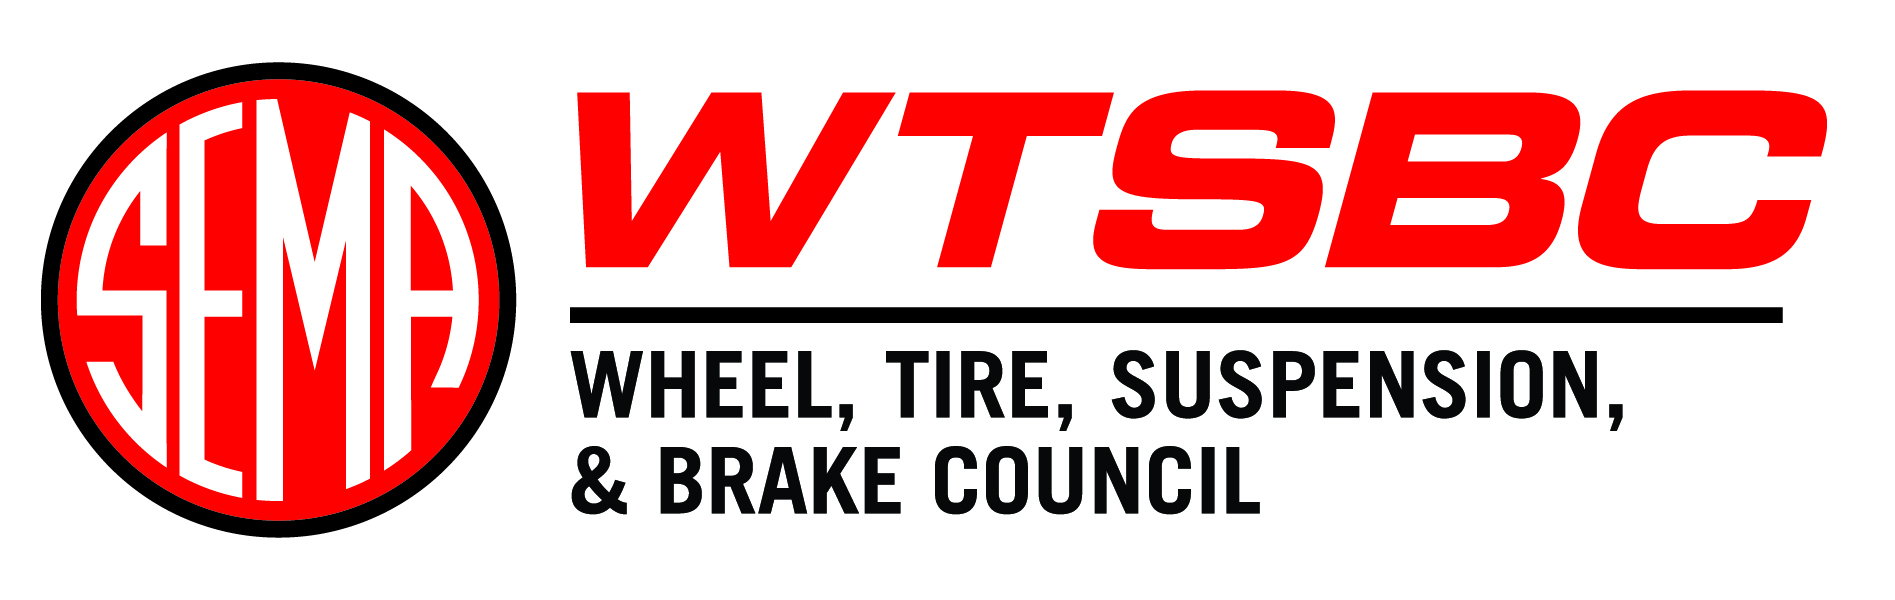 Wheel, Tire, Suspension, & Brake Council (WTSBC) - logo